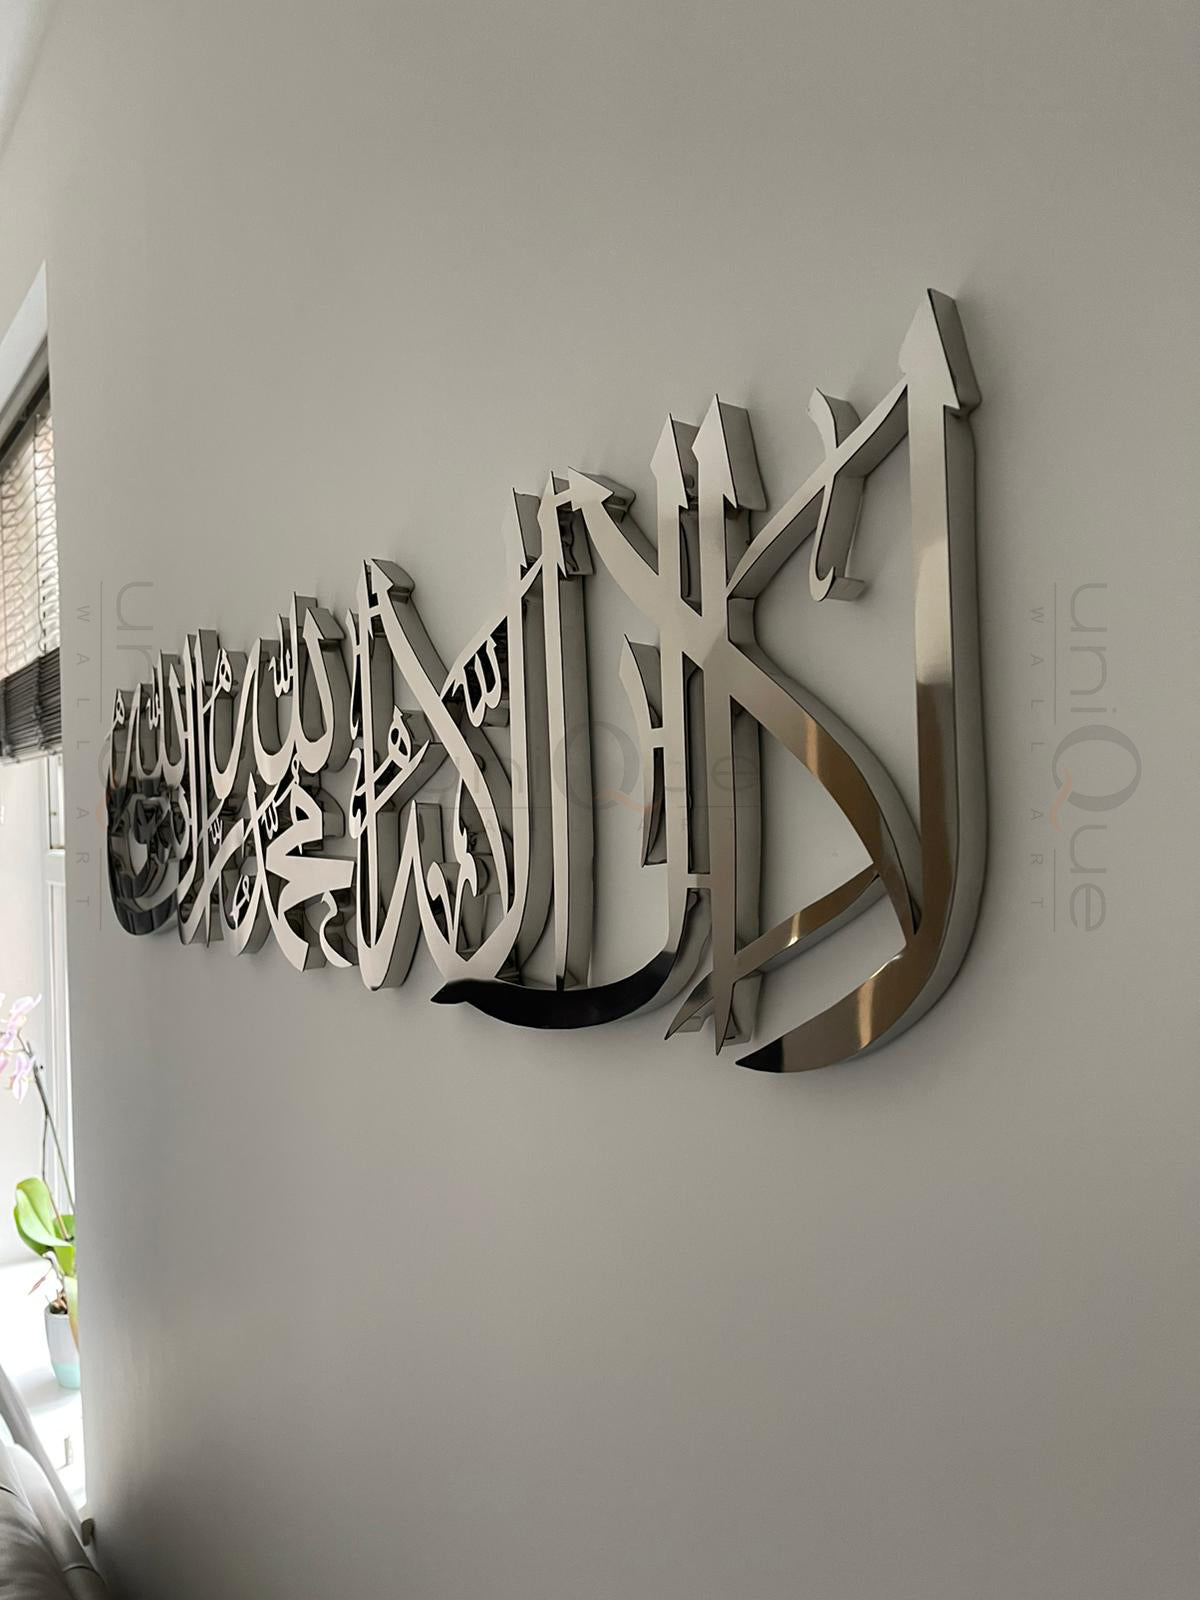 Shahada Kalima Calligraphy Arabic Islamic 3D Stainless Steel Wall Art